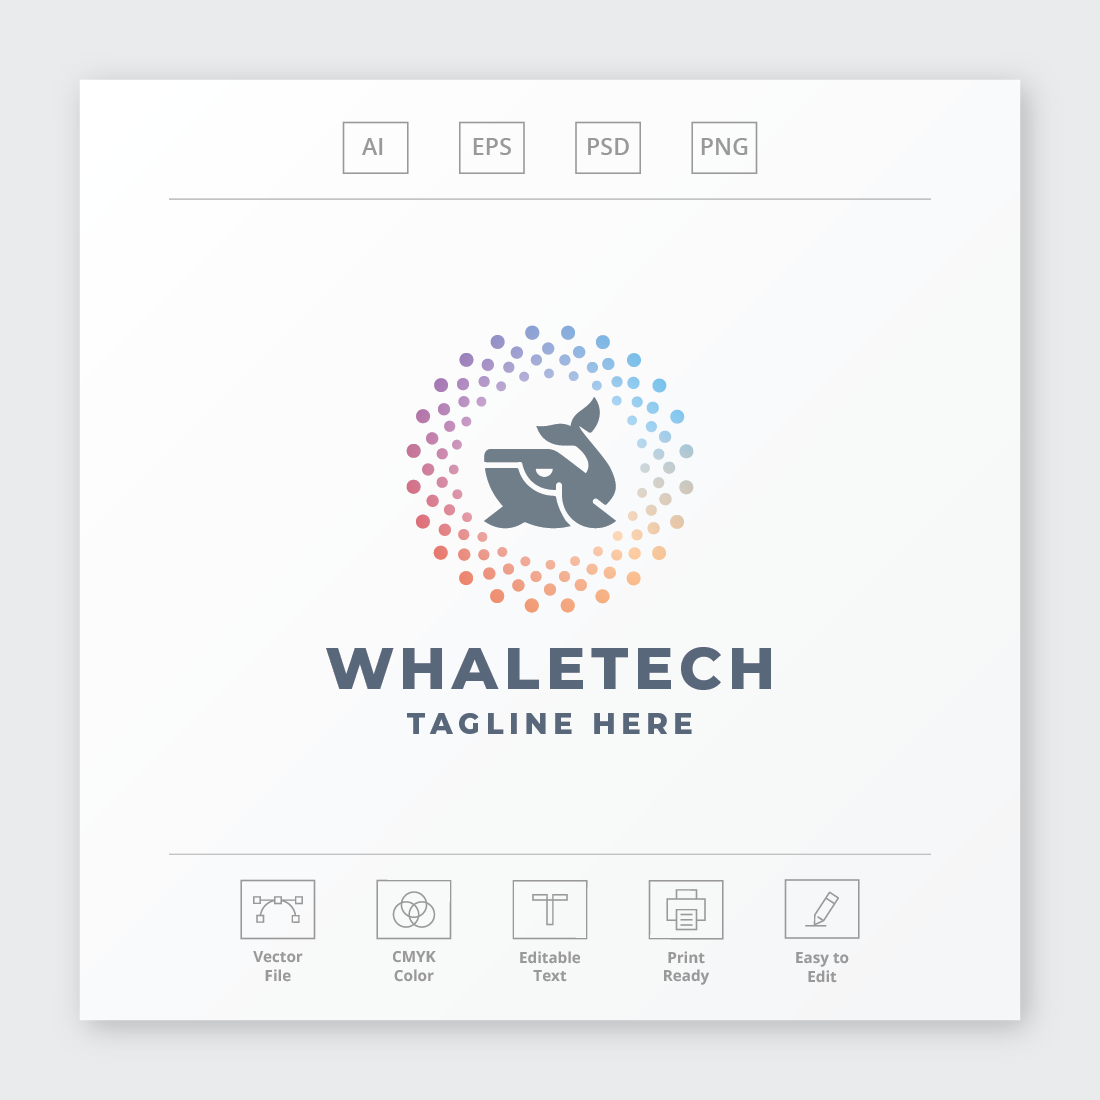 Whale Tech Logo cover image.